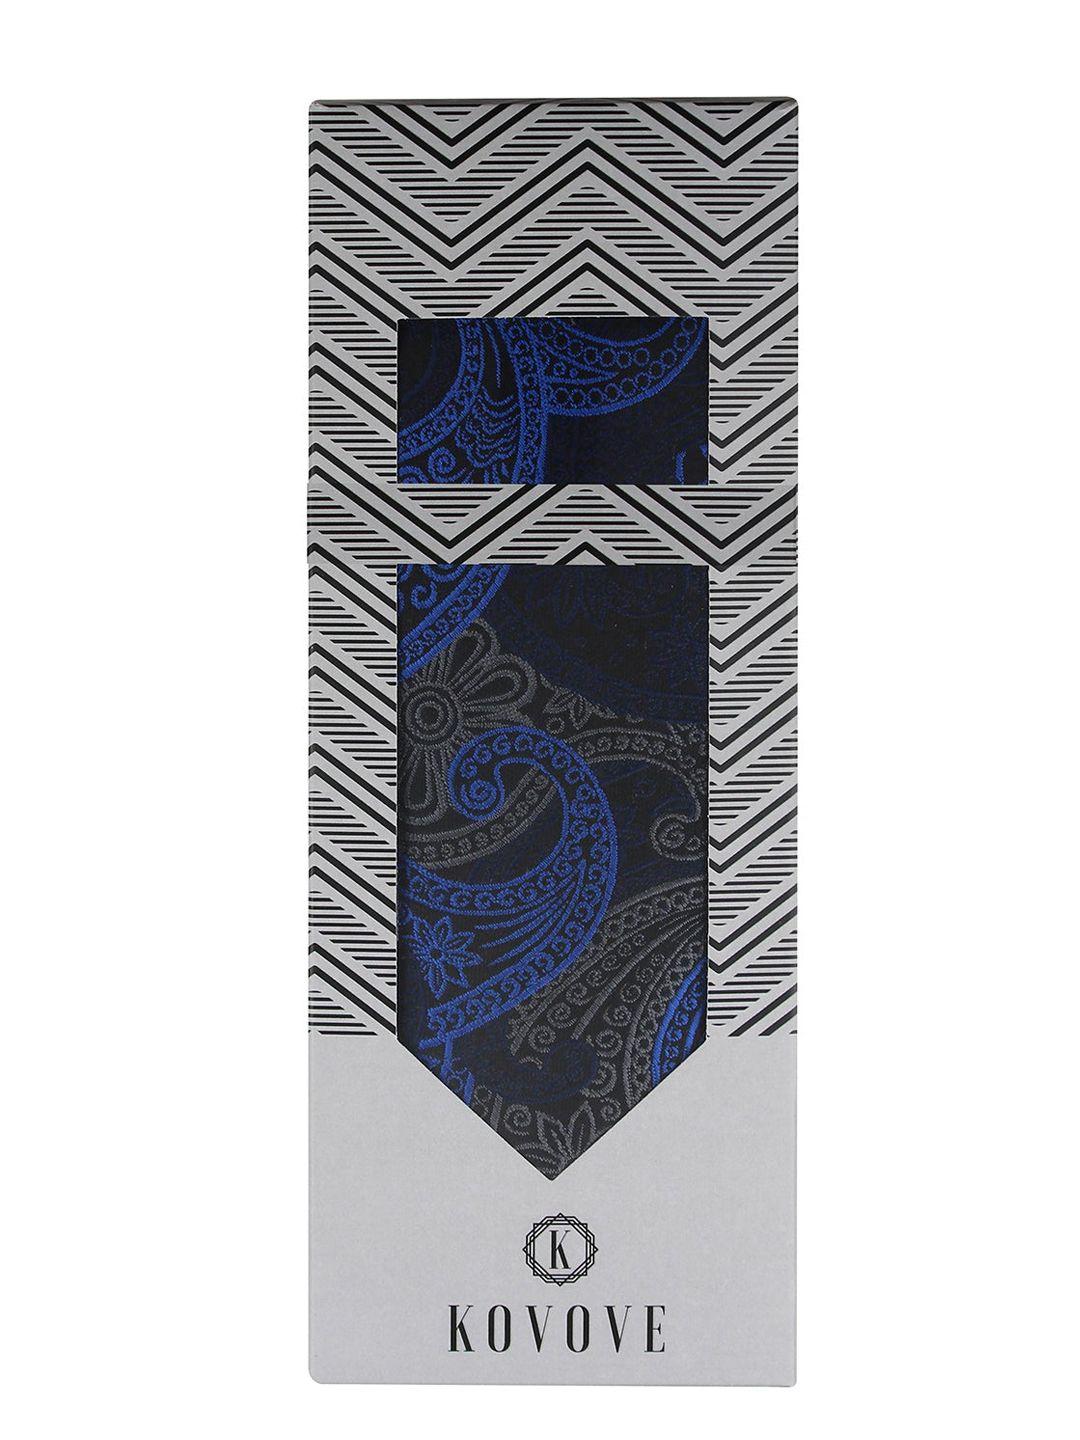 kovove navy blue & black tie with pocket square